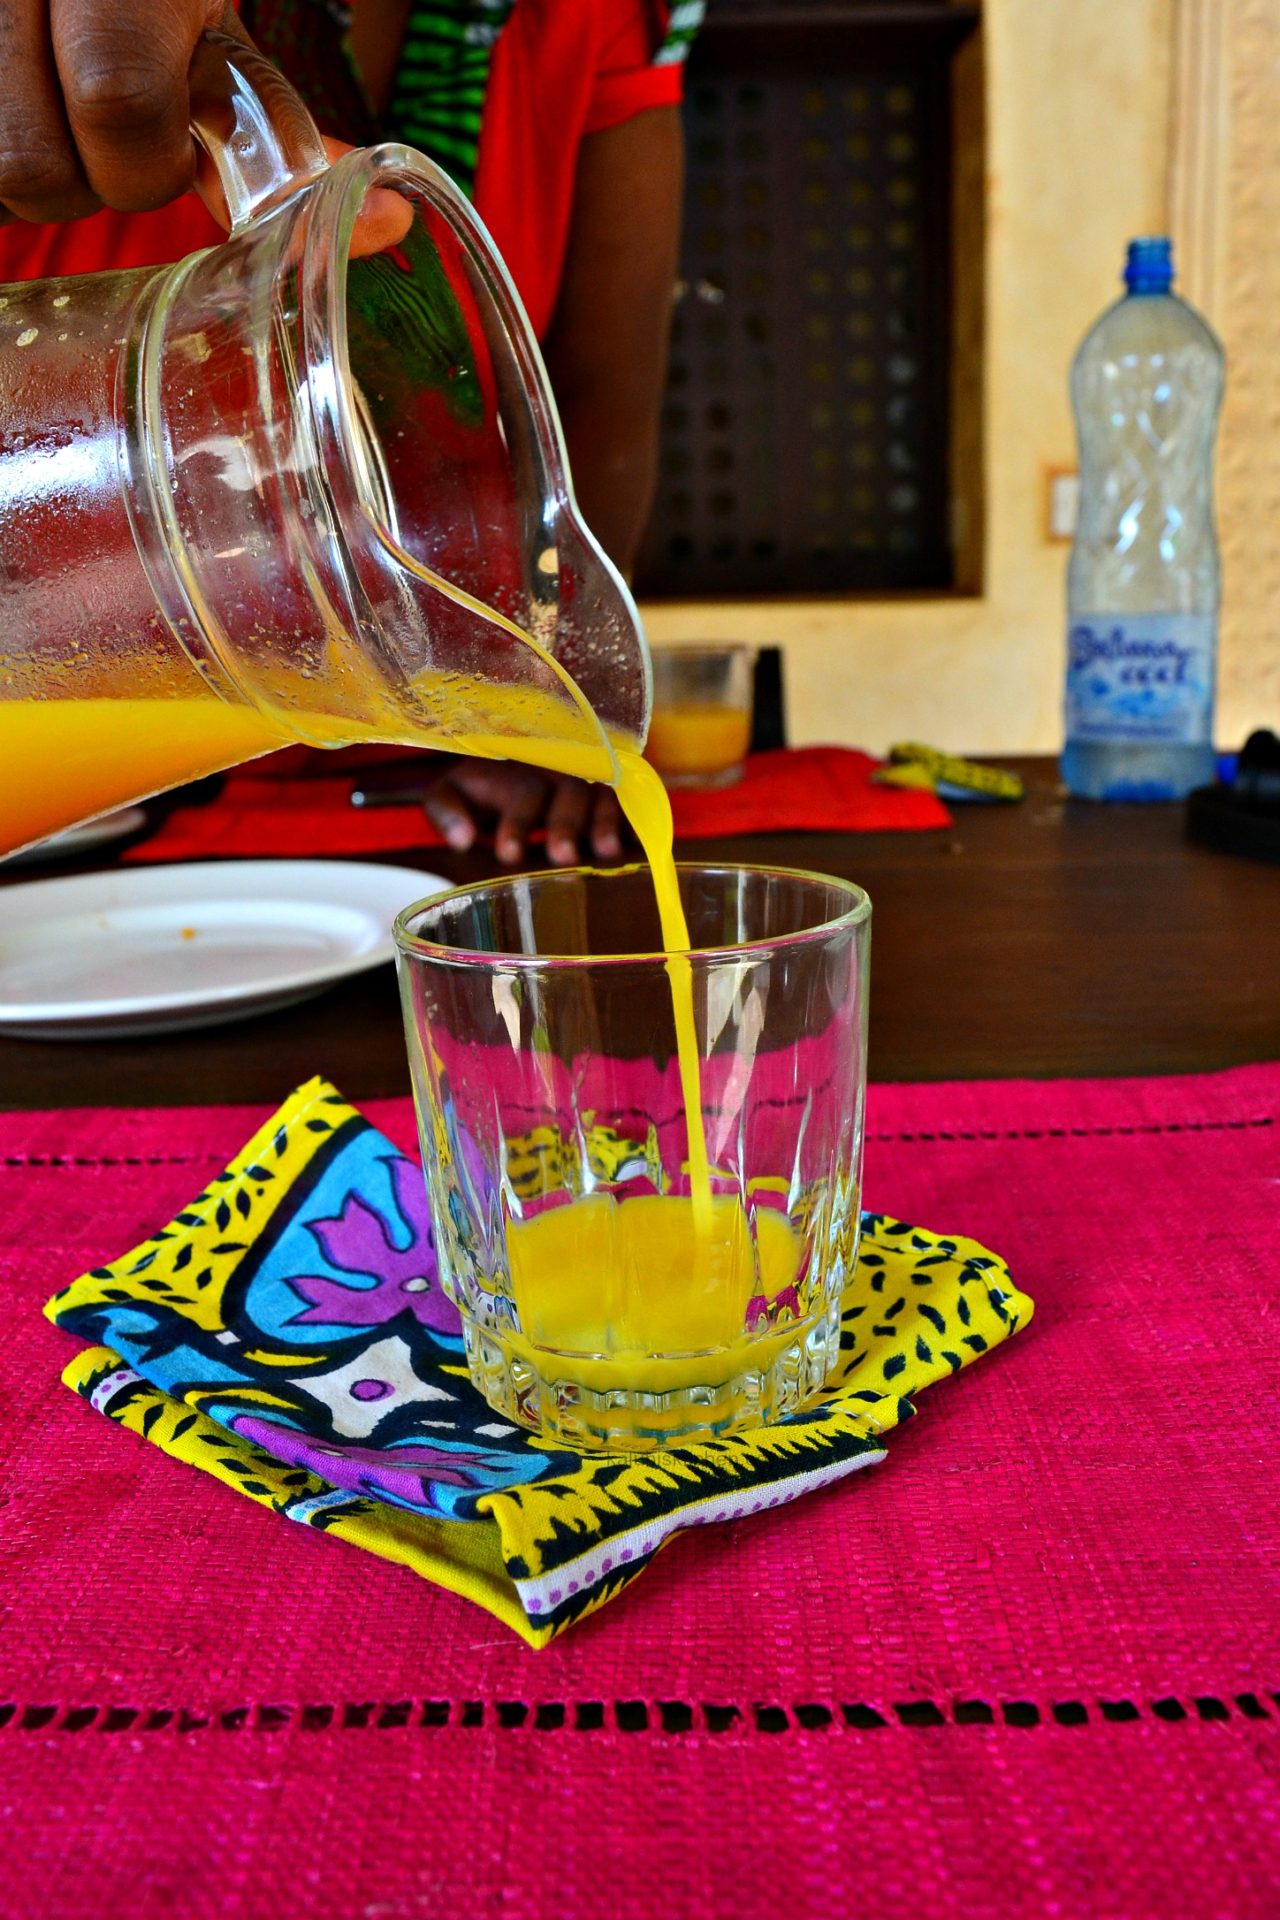 fresh mango juice served at kiwandani house as part of the breakfast_affordable accomodation at Lamu_Lamu Food Festival